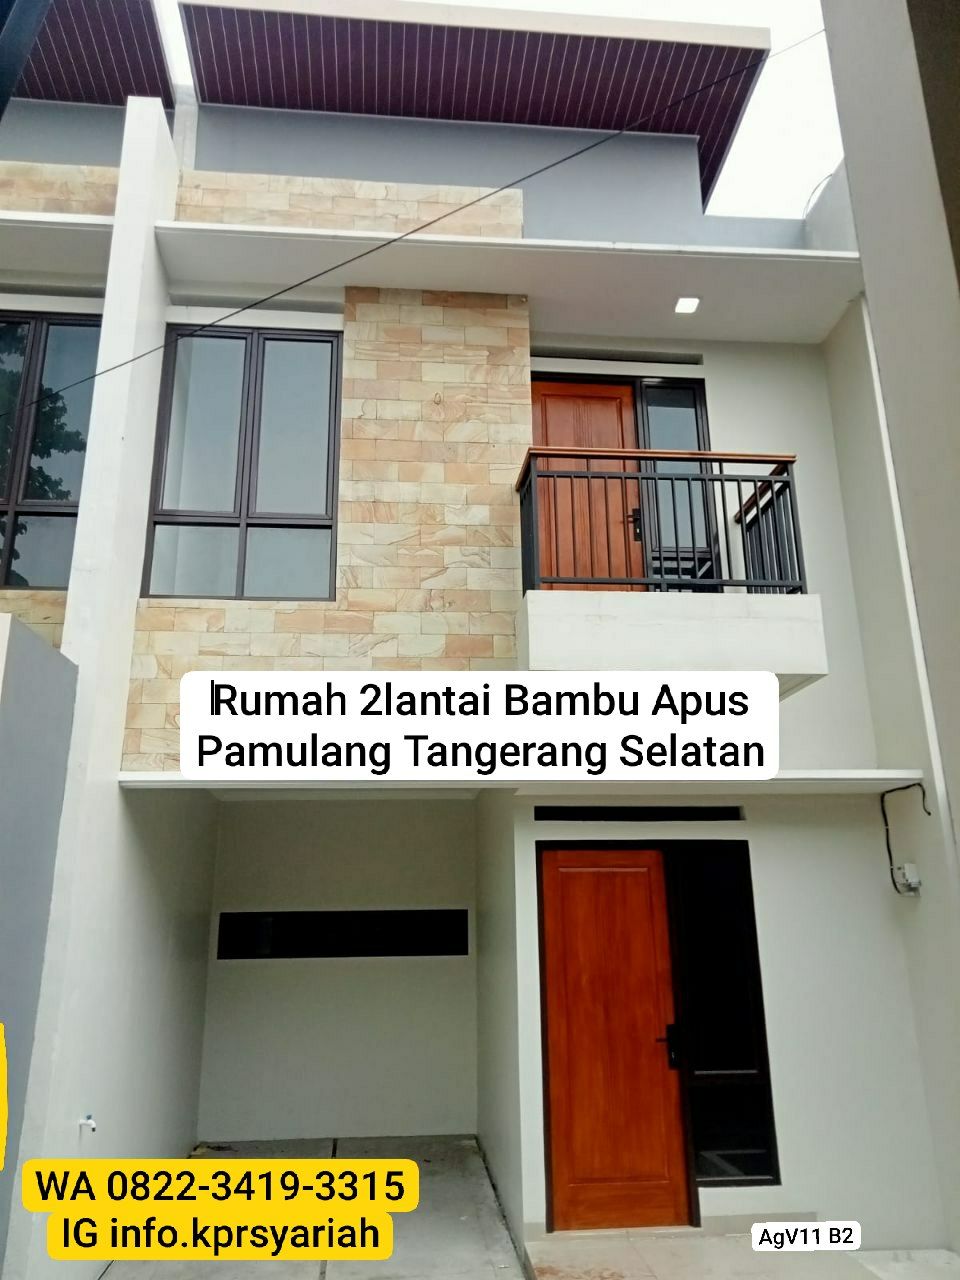 Rumah 2lantai Bambu Apus Pamulang Tangerang Selatan sisa 1 unit